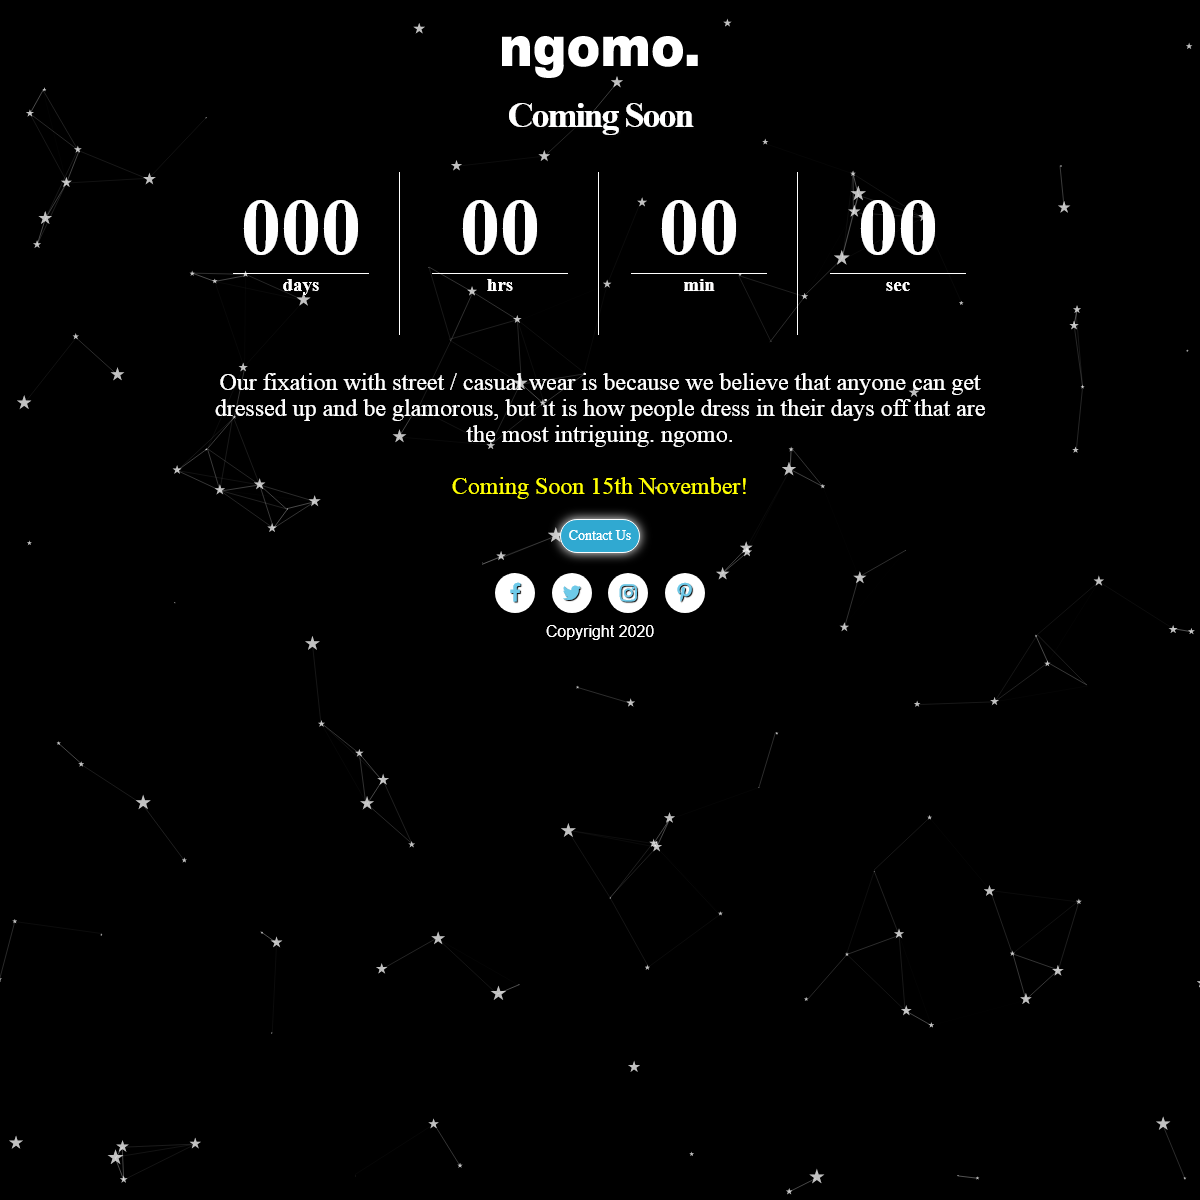 A complete backup of ngomo.com